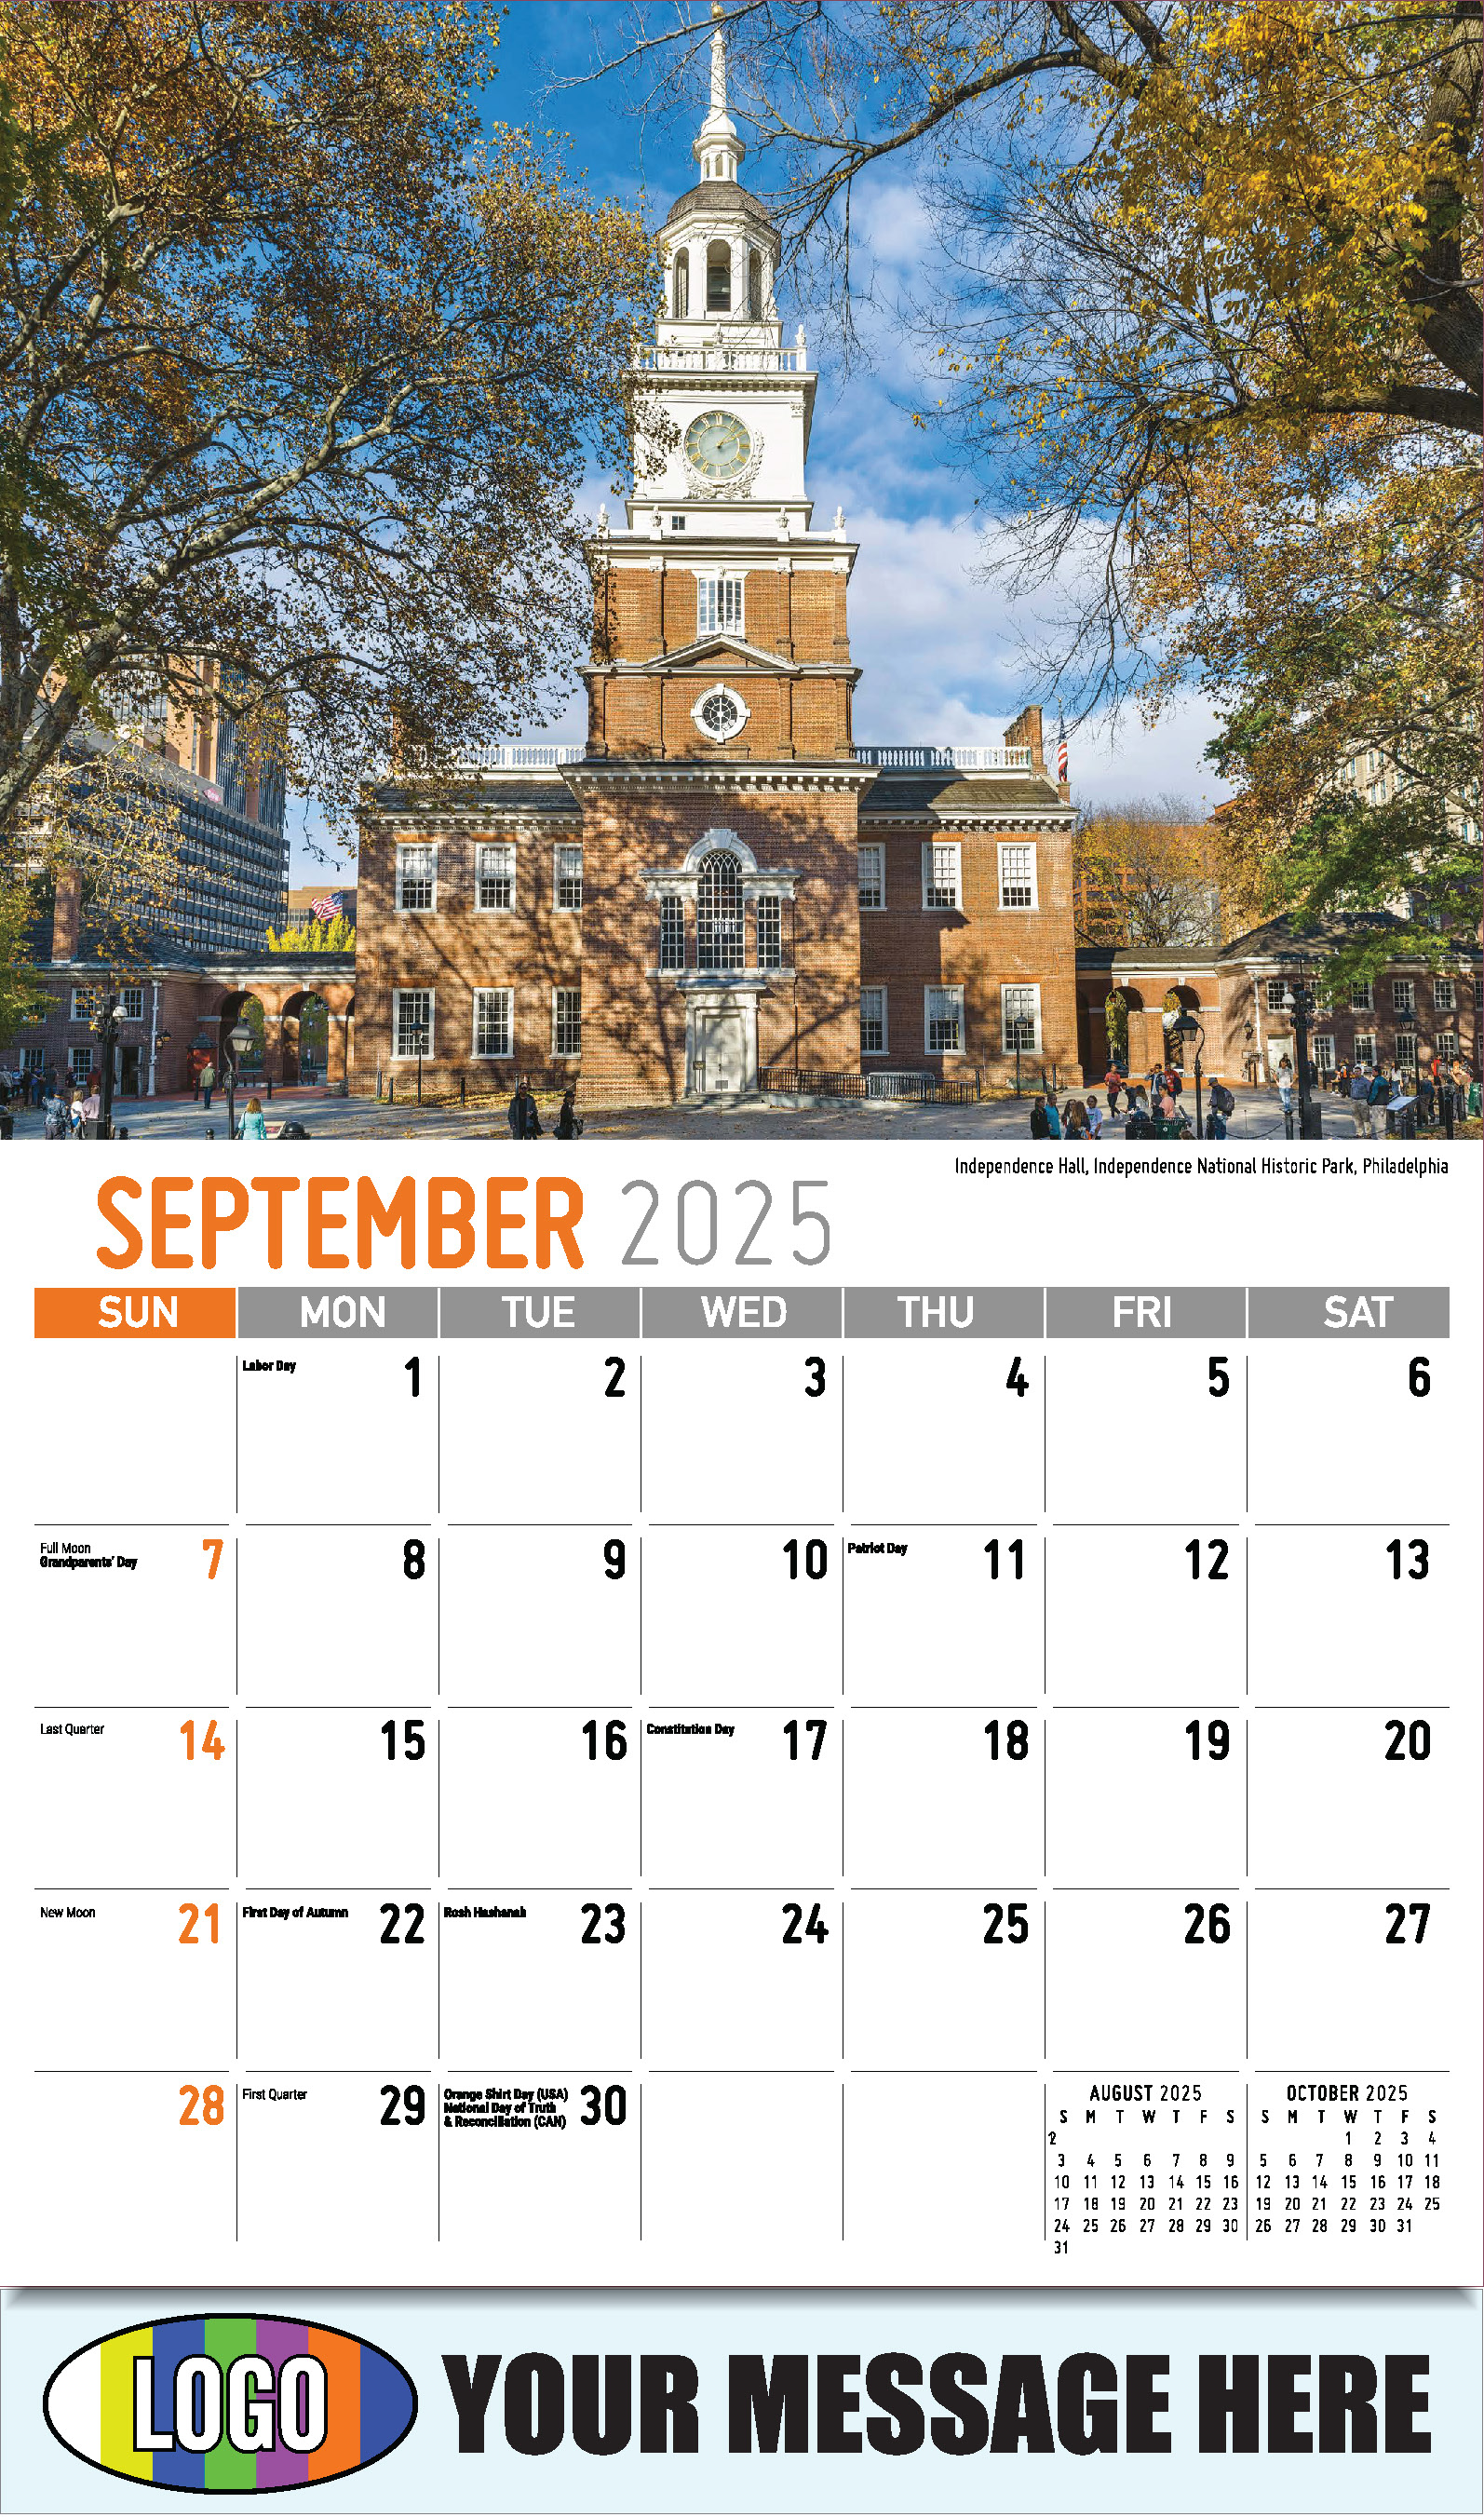 Scenes of Pennsylvania 2025 Business Promotion Calendar - September